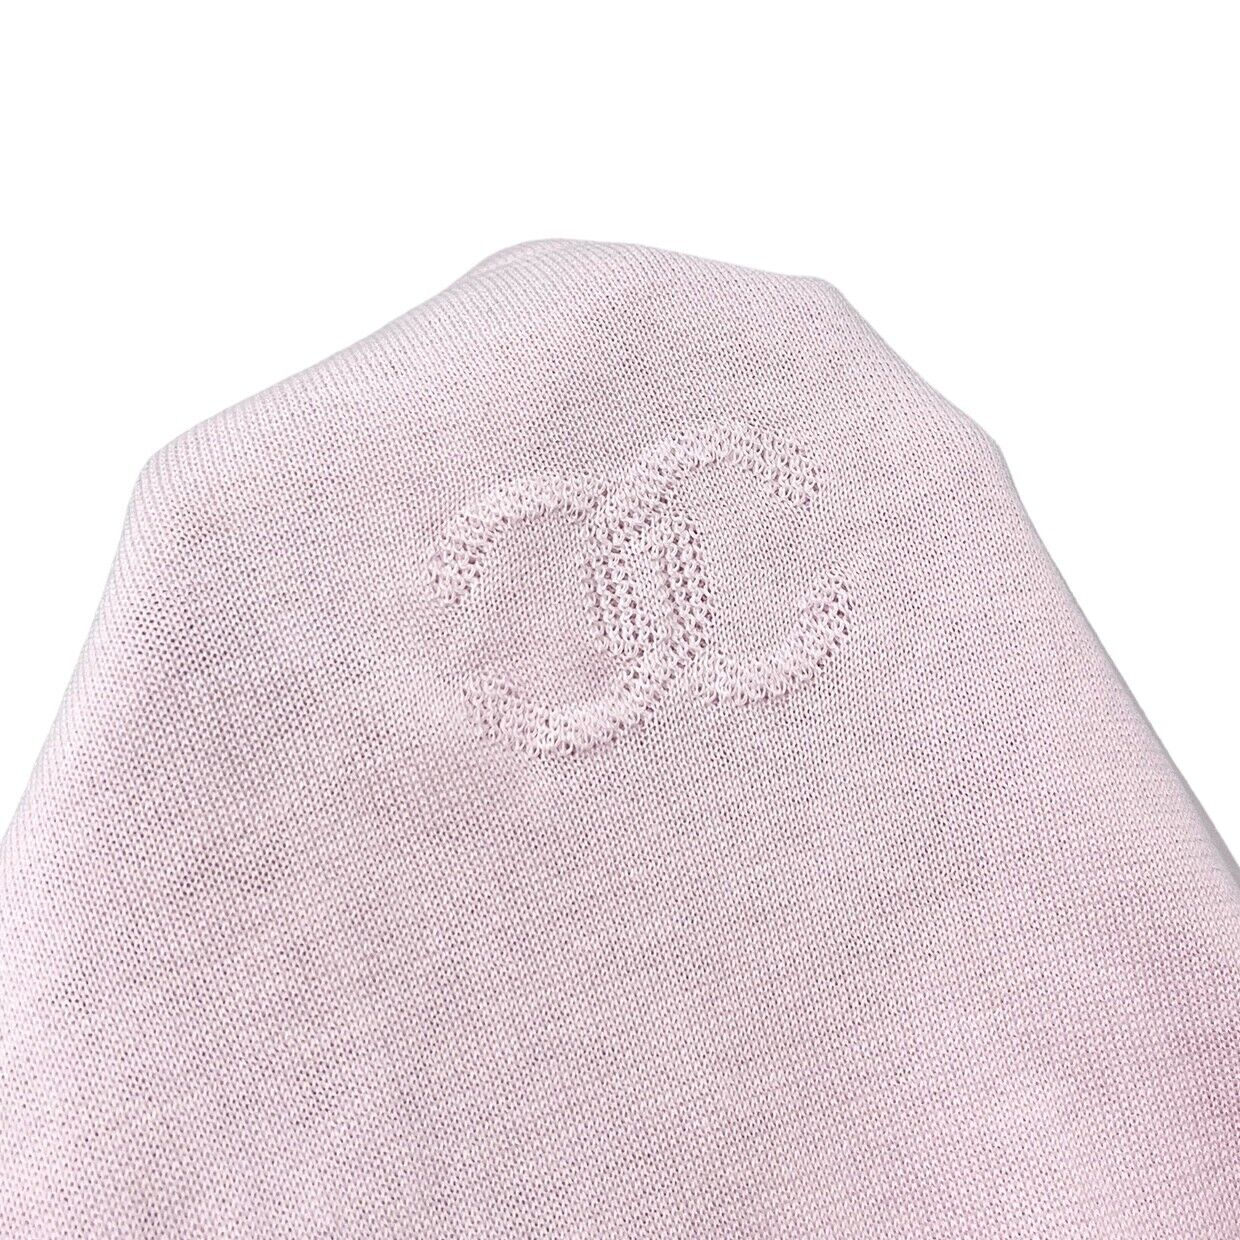 CHANEL Vintage 06P CC Logo Summer Knit Top #38 T-shirt Pink Cotton Rank AB